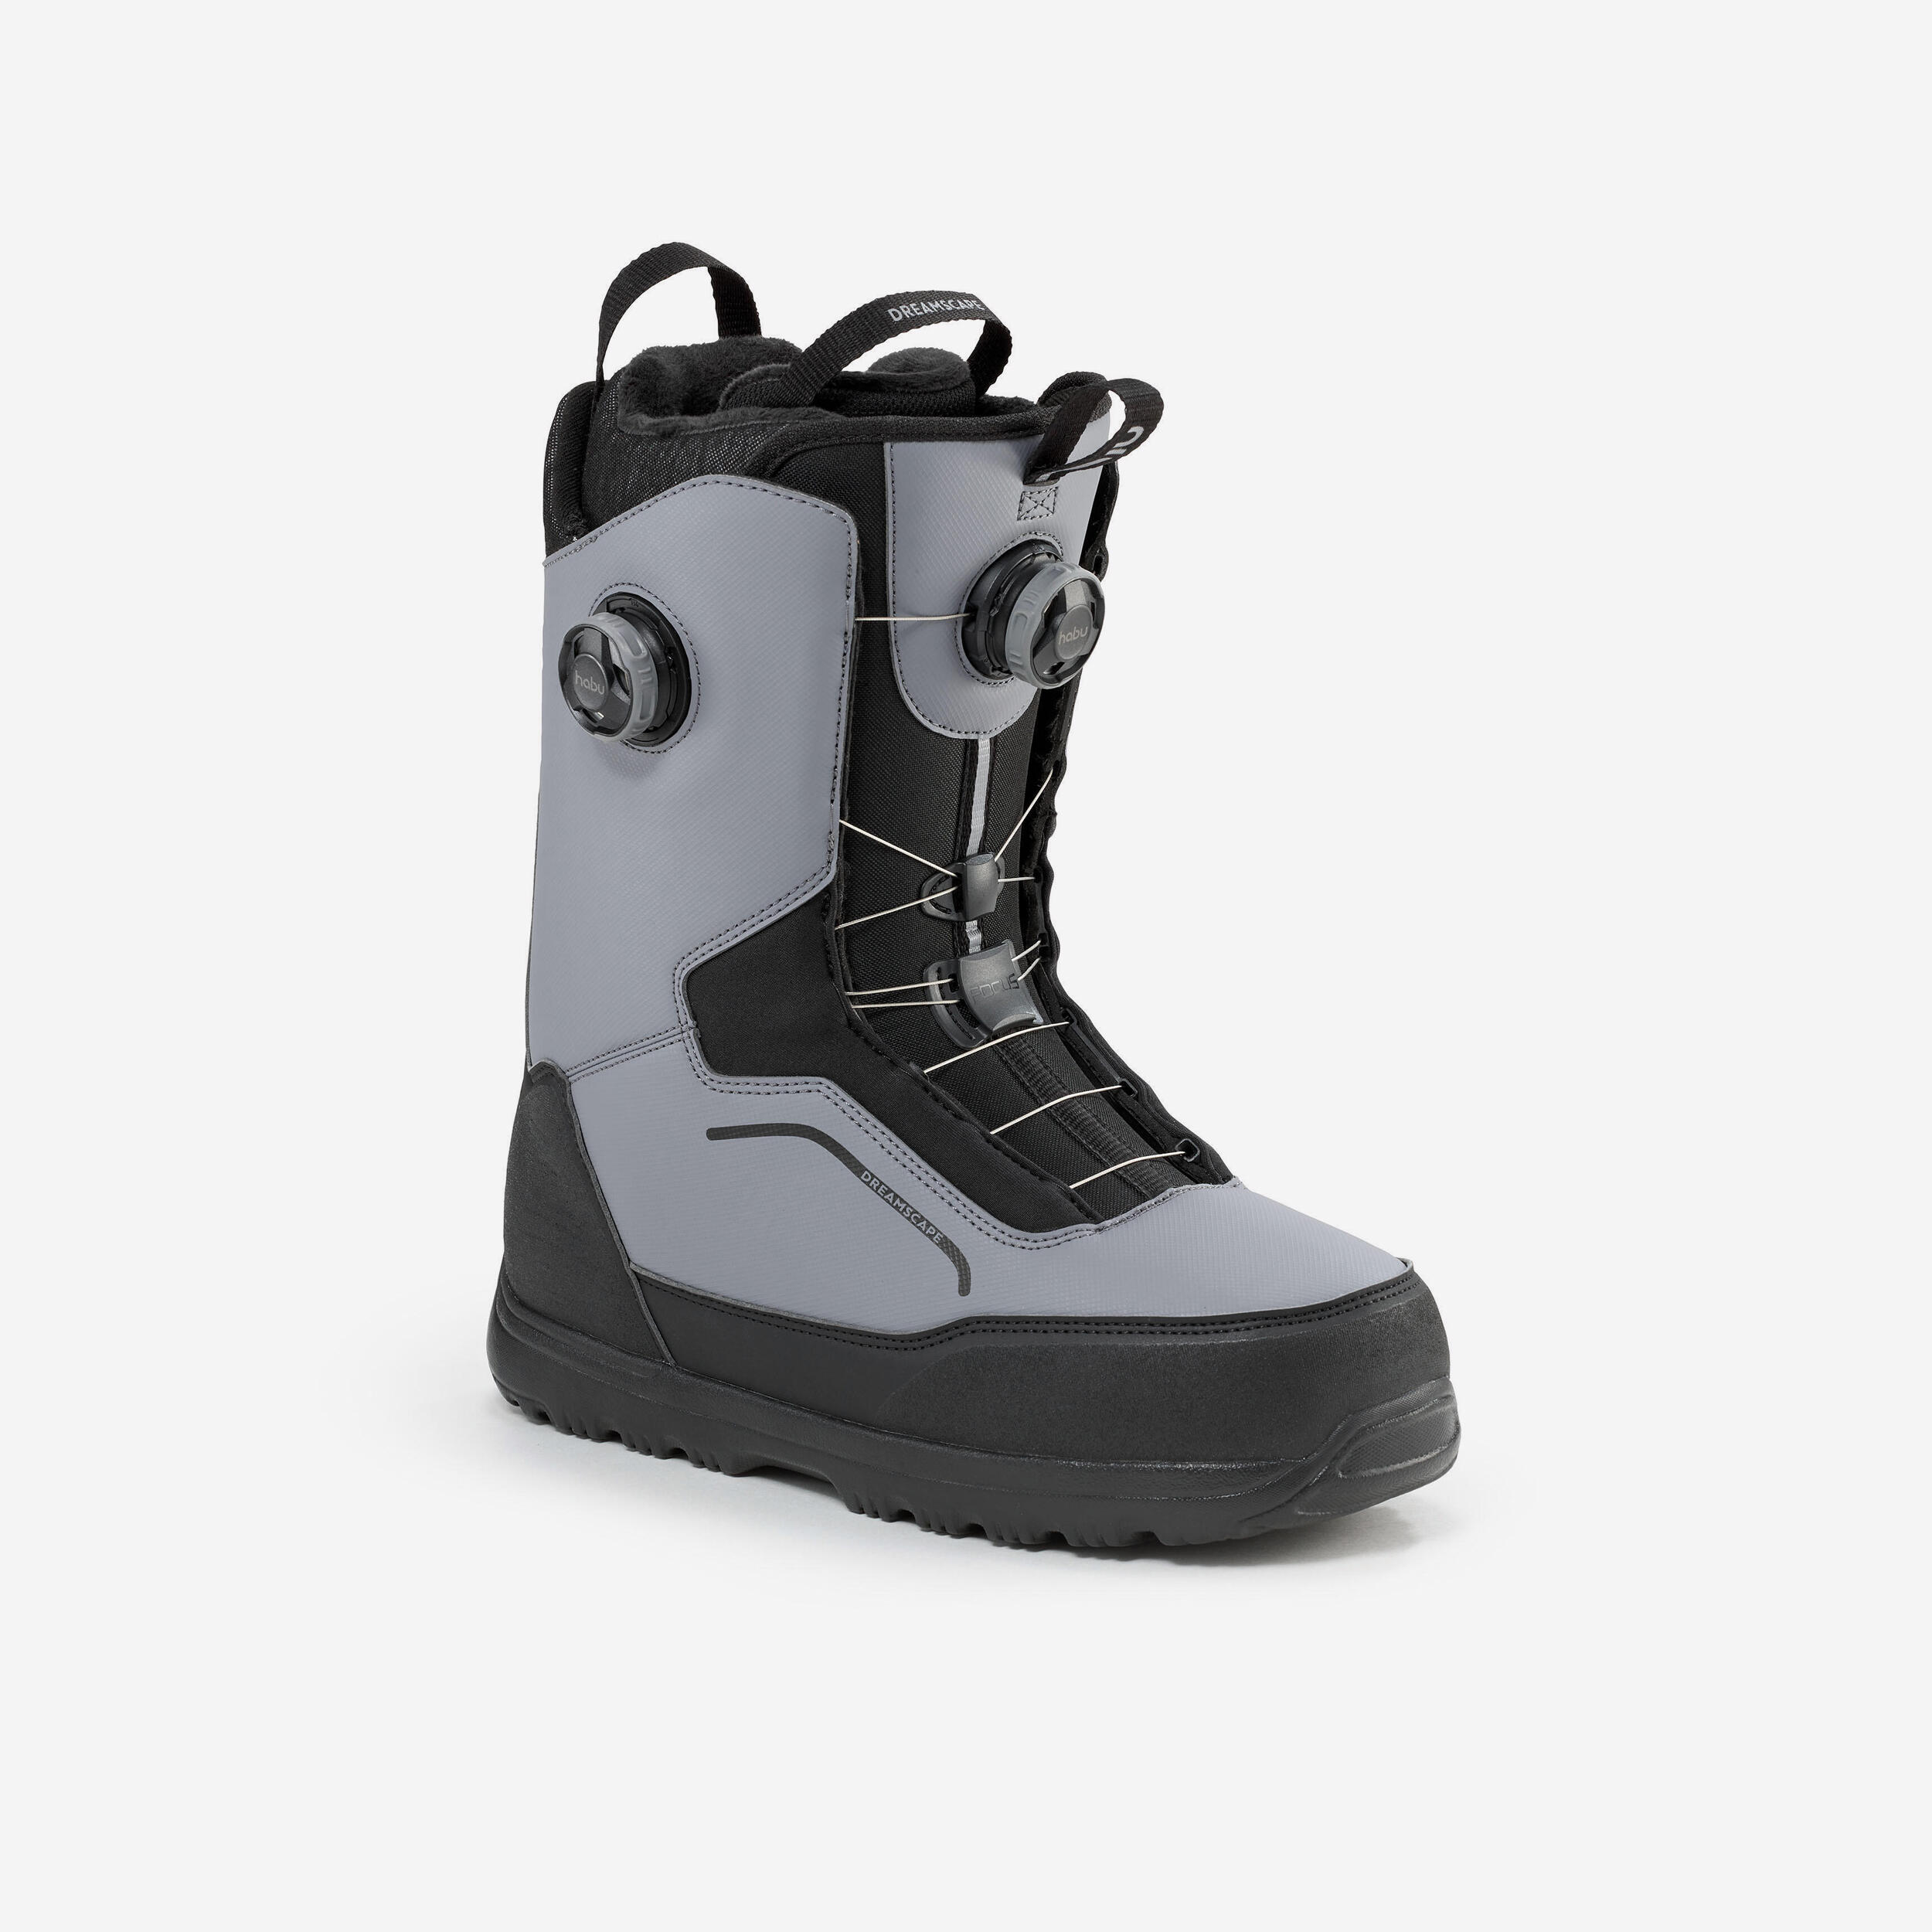 Double wheel snowboard boots, rigid flex - Allroad 900 Grey 1/15